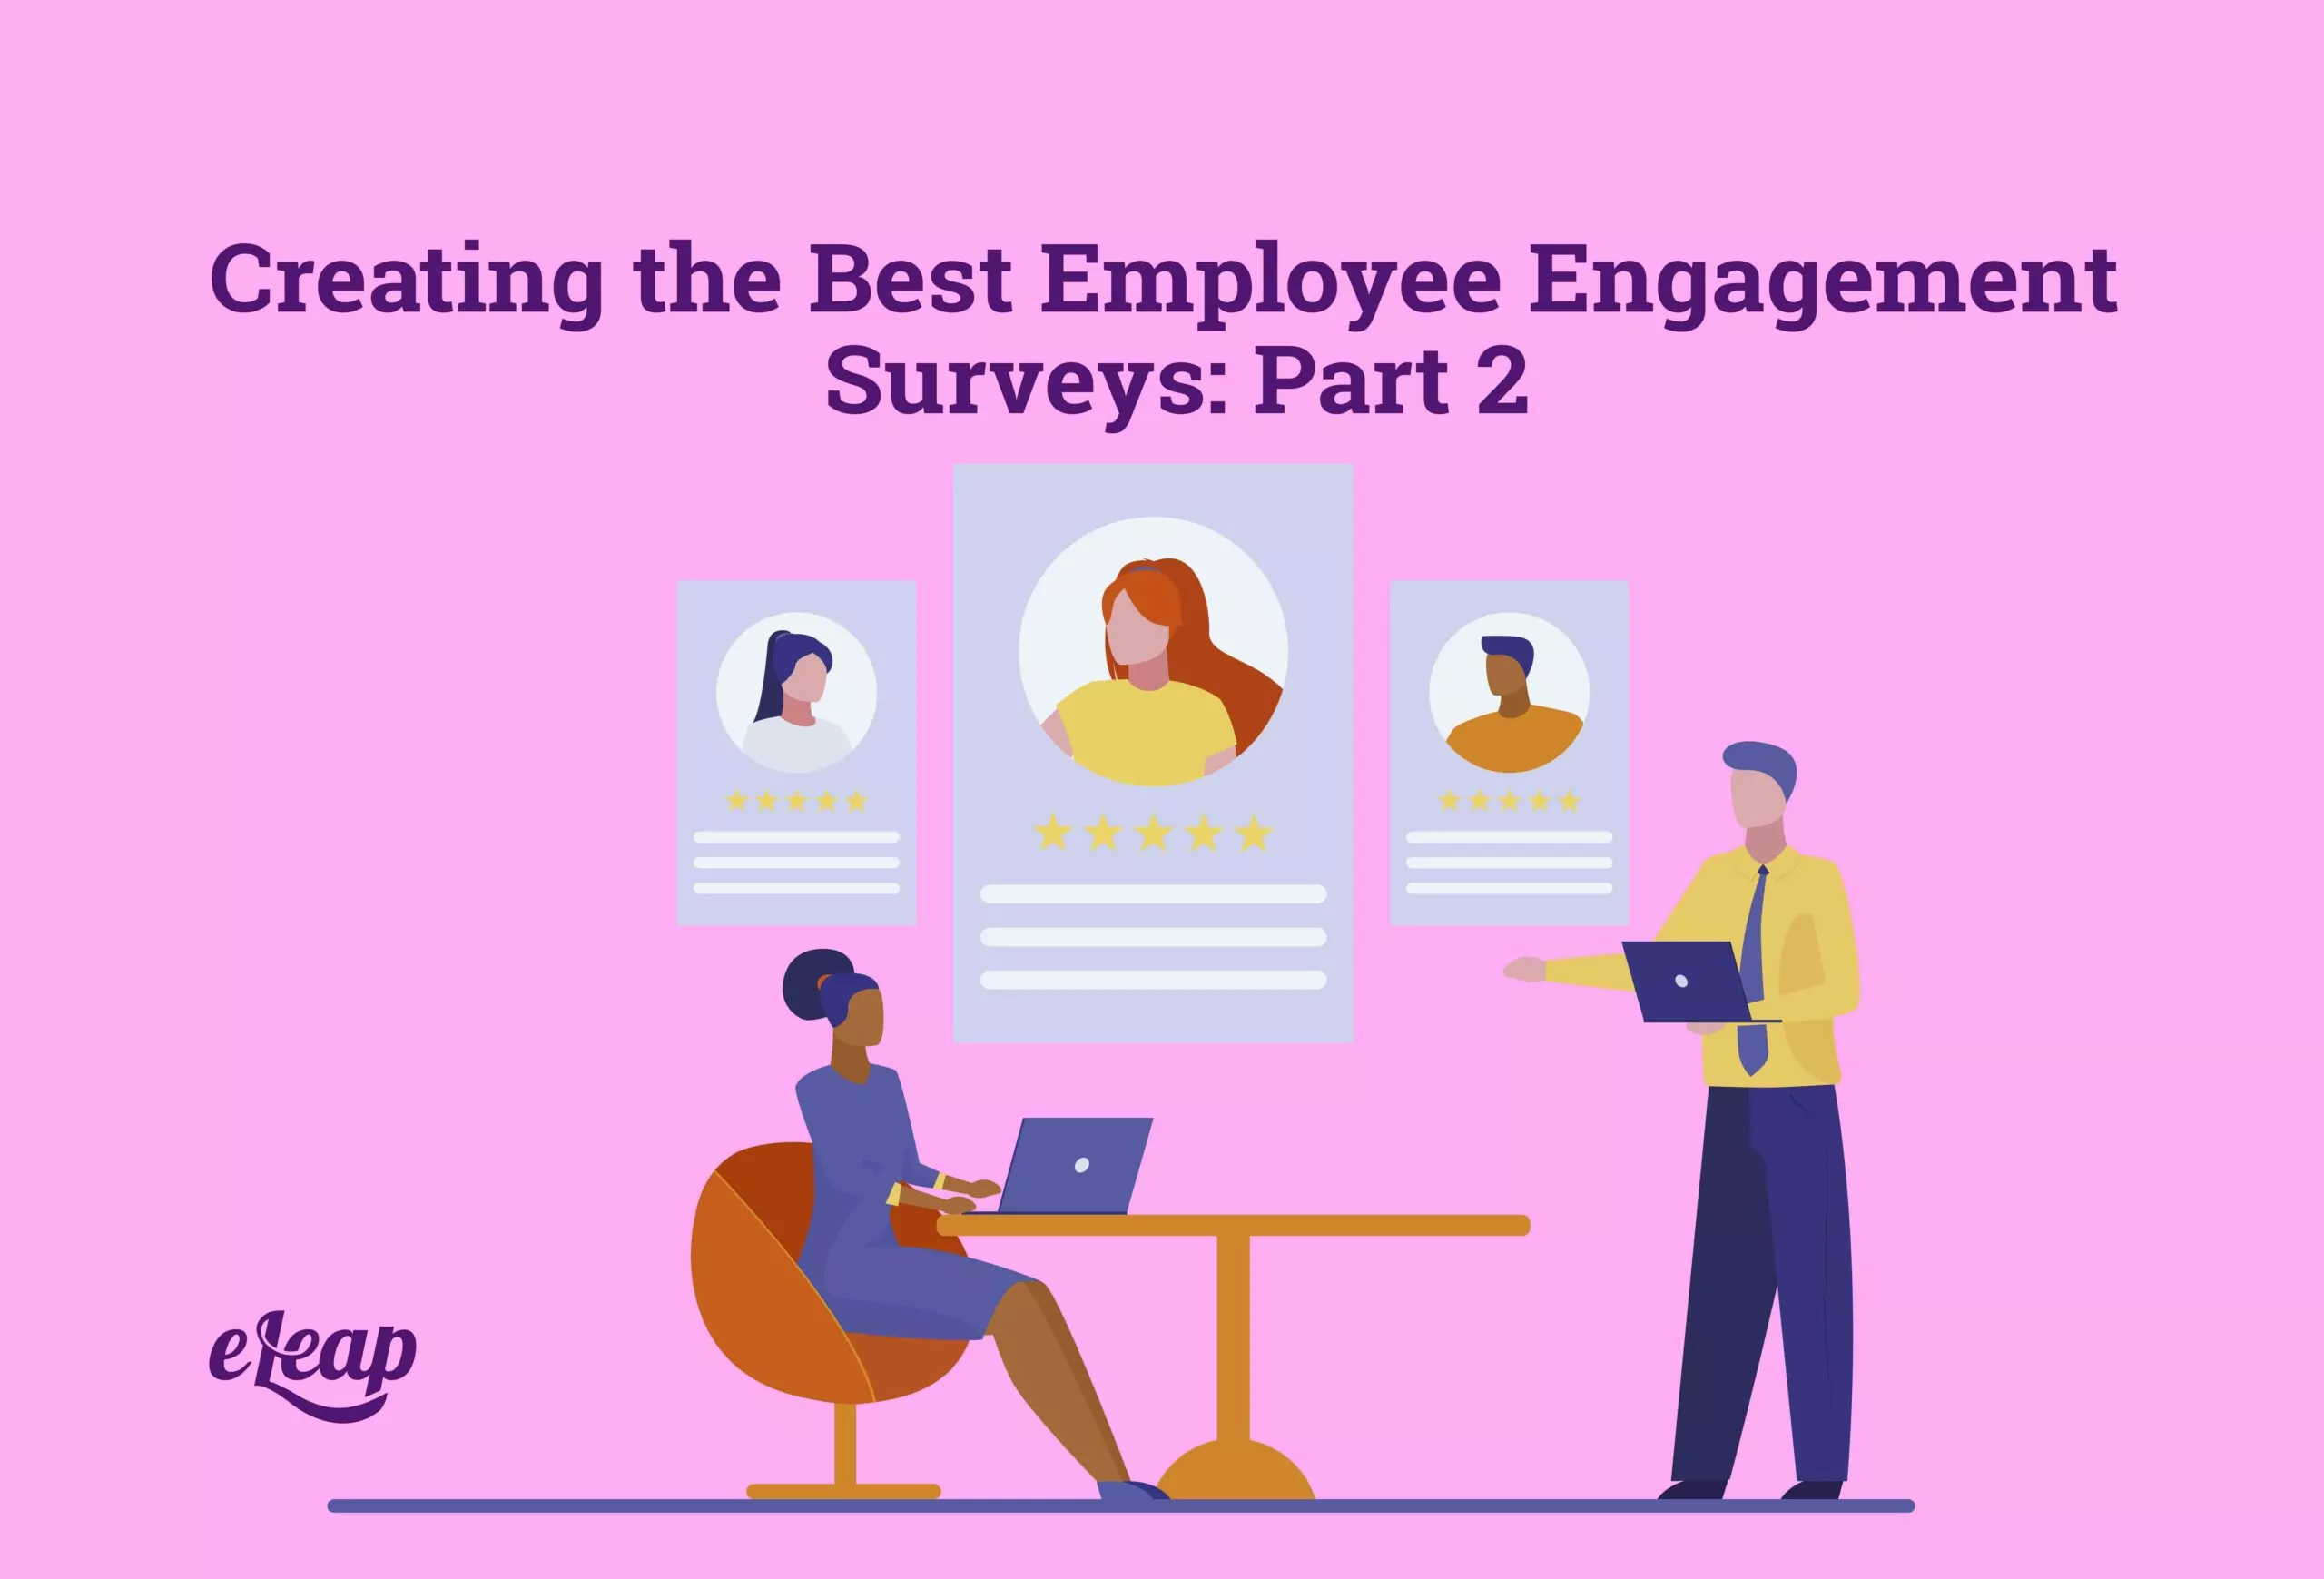 Creating the Best Employee Engagement Surveys: Part 2